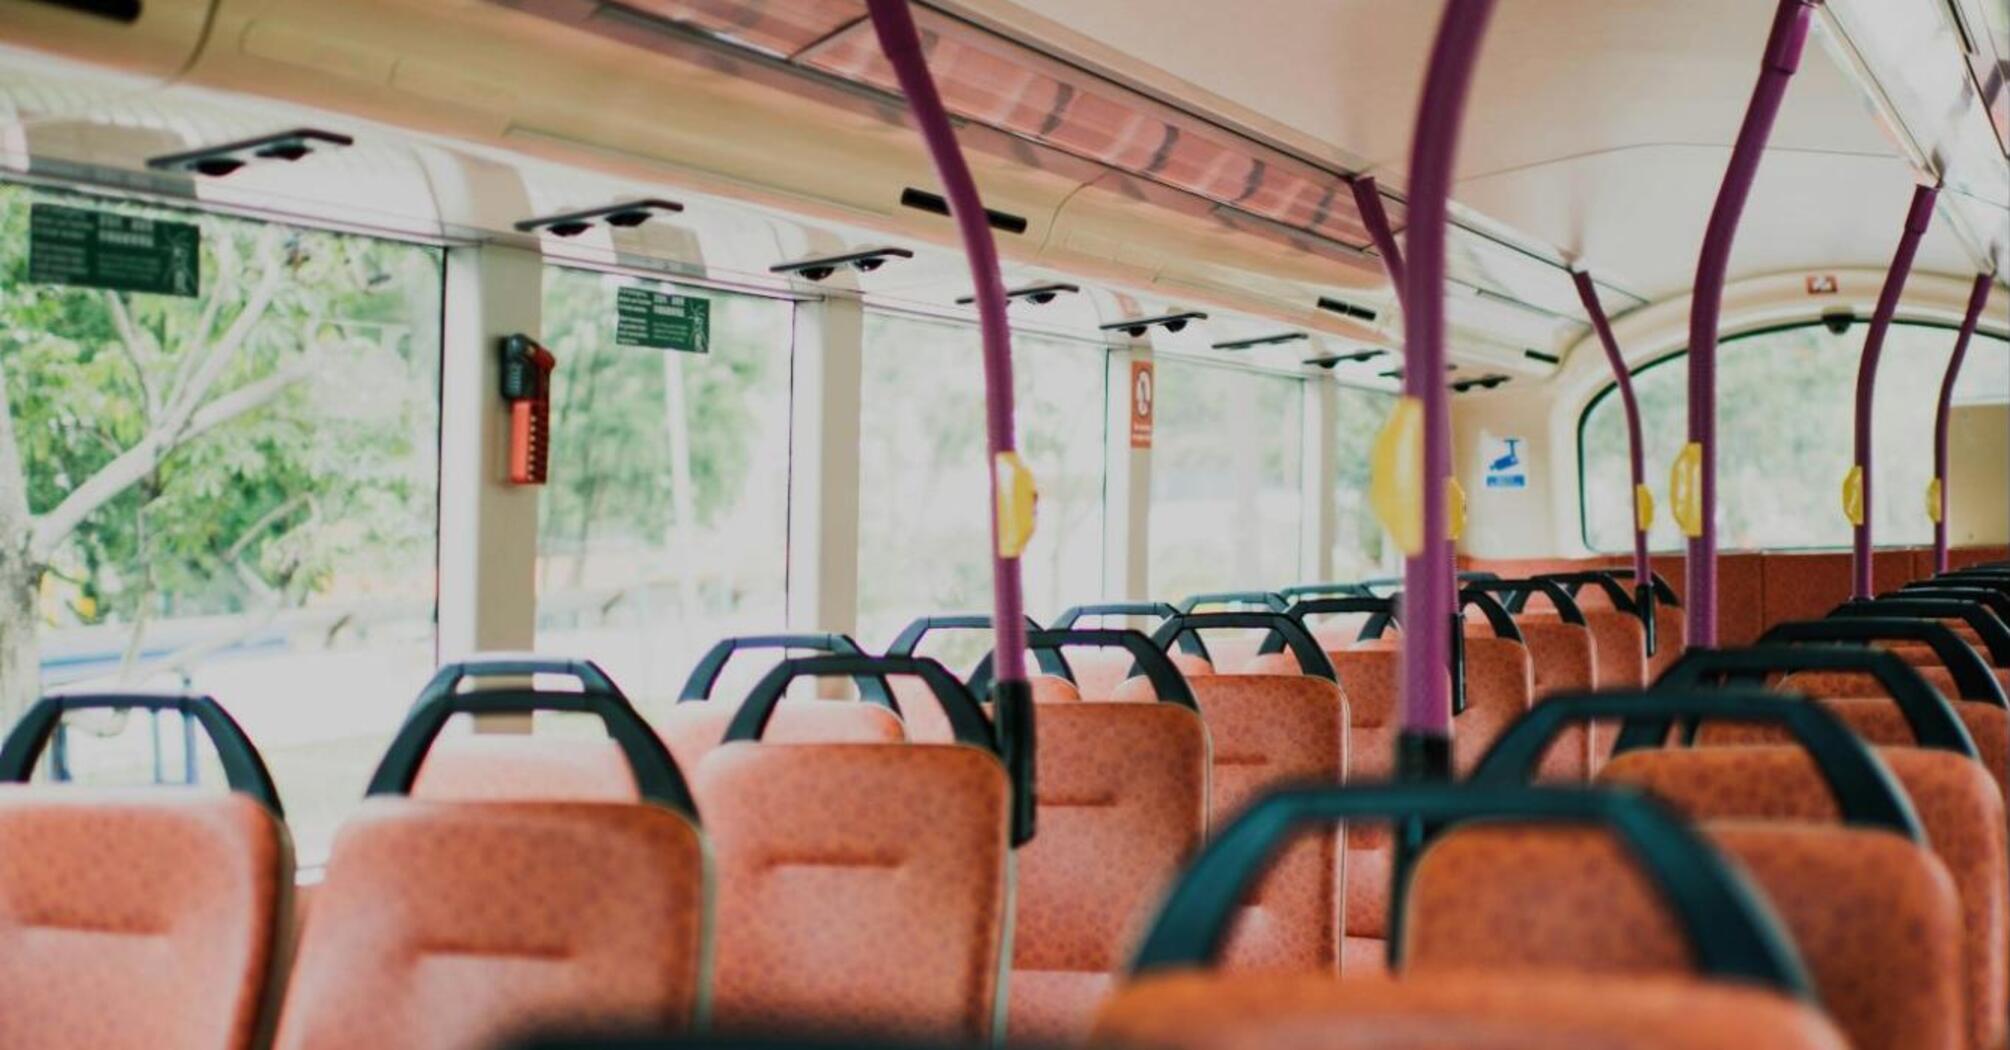 Interior of a public bus with orange seats